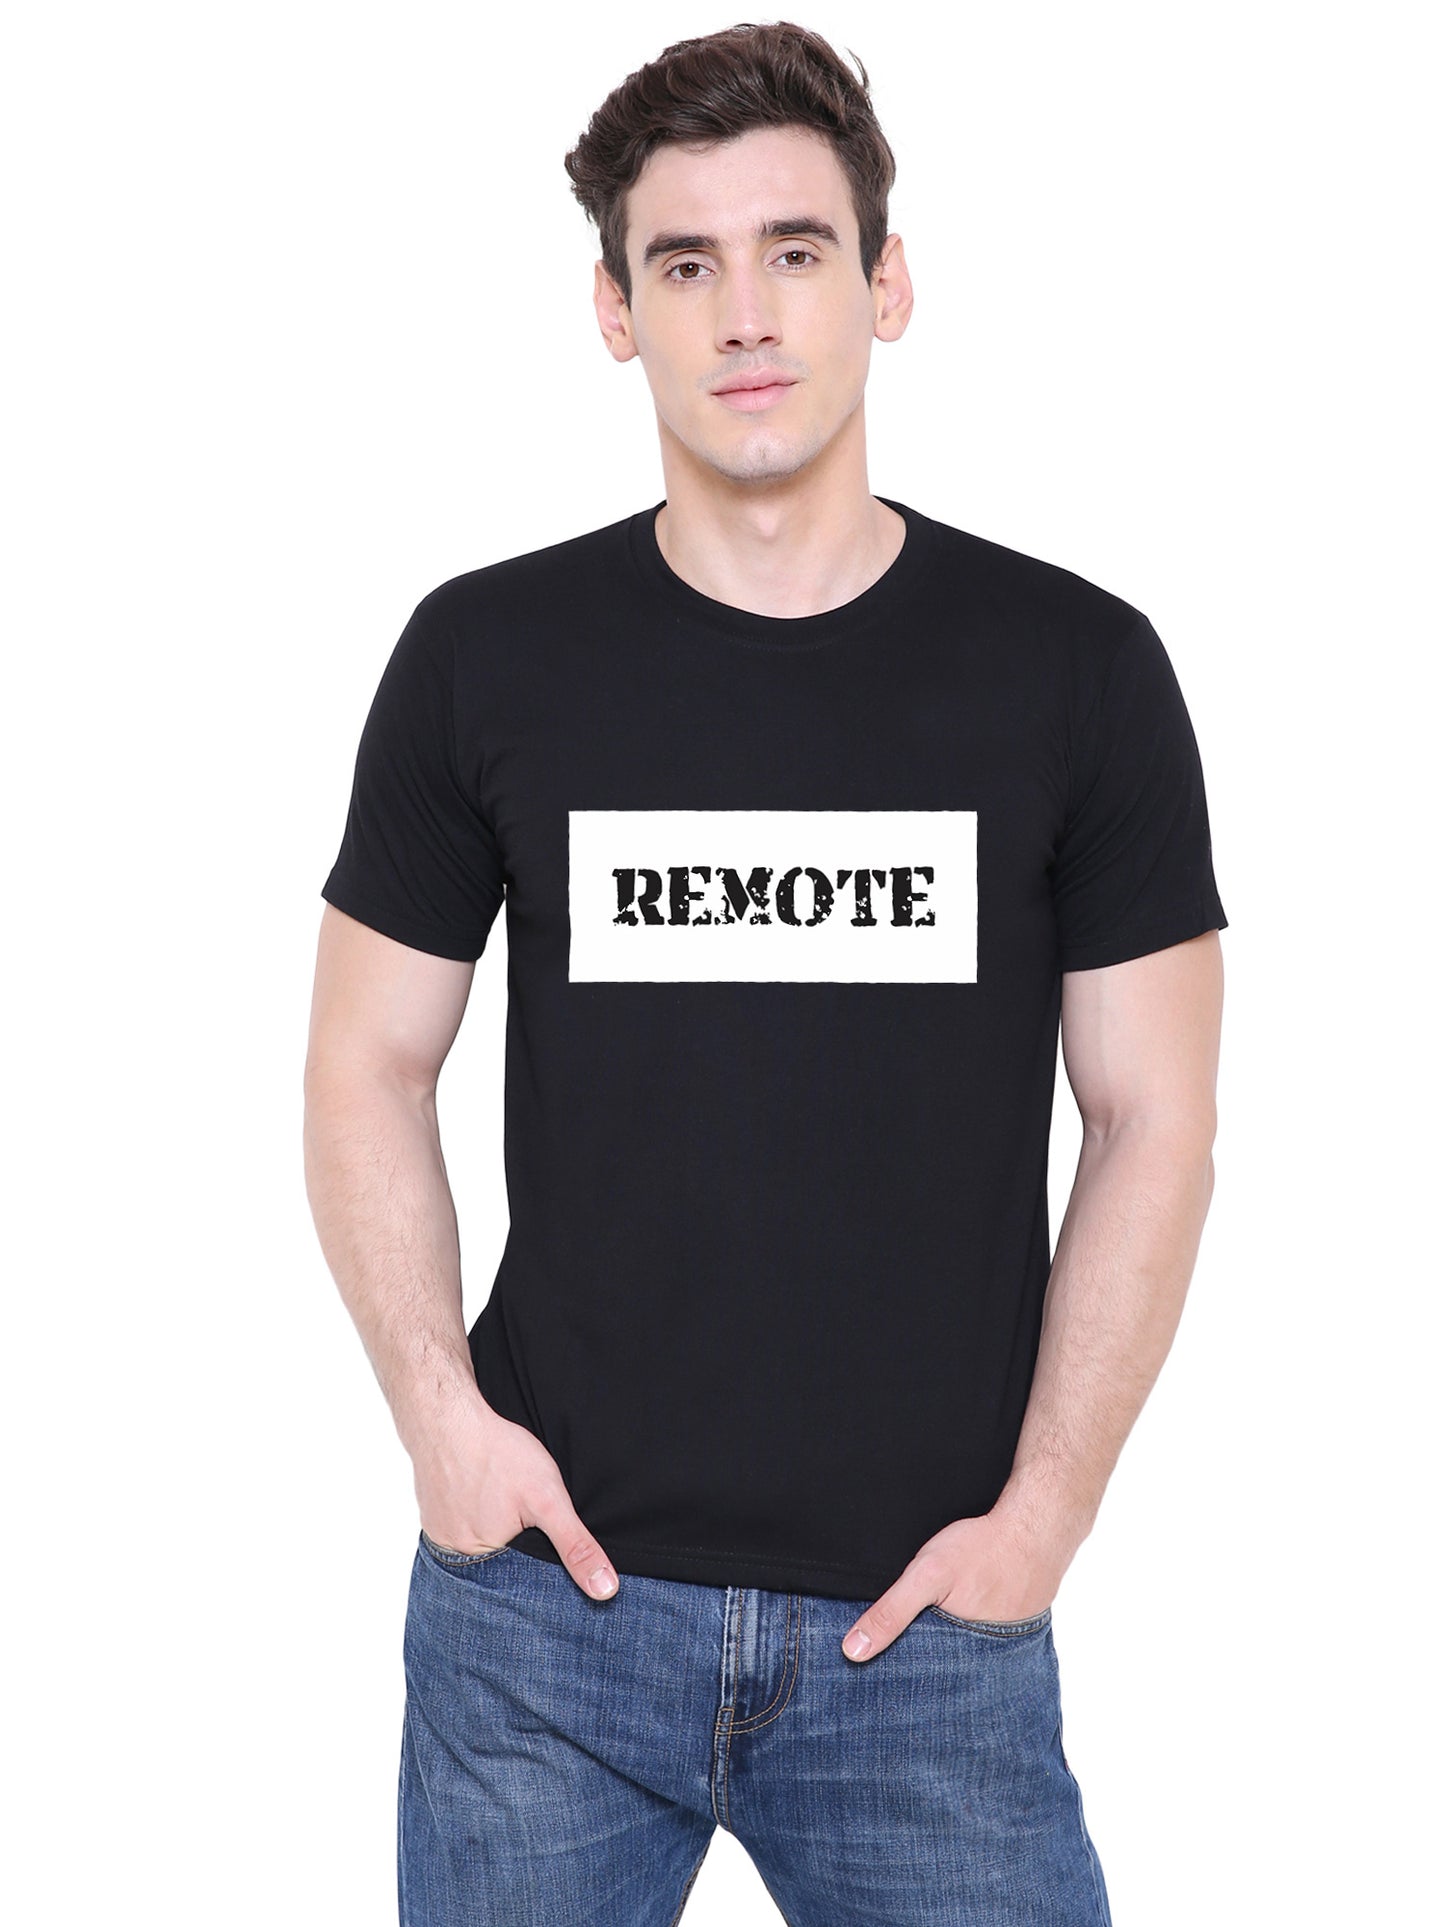 Remote Control matching Couple T shirts- Black